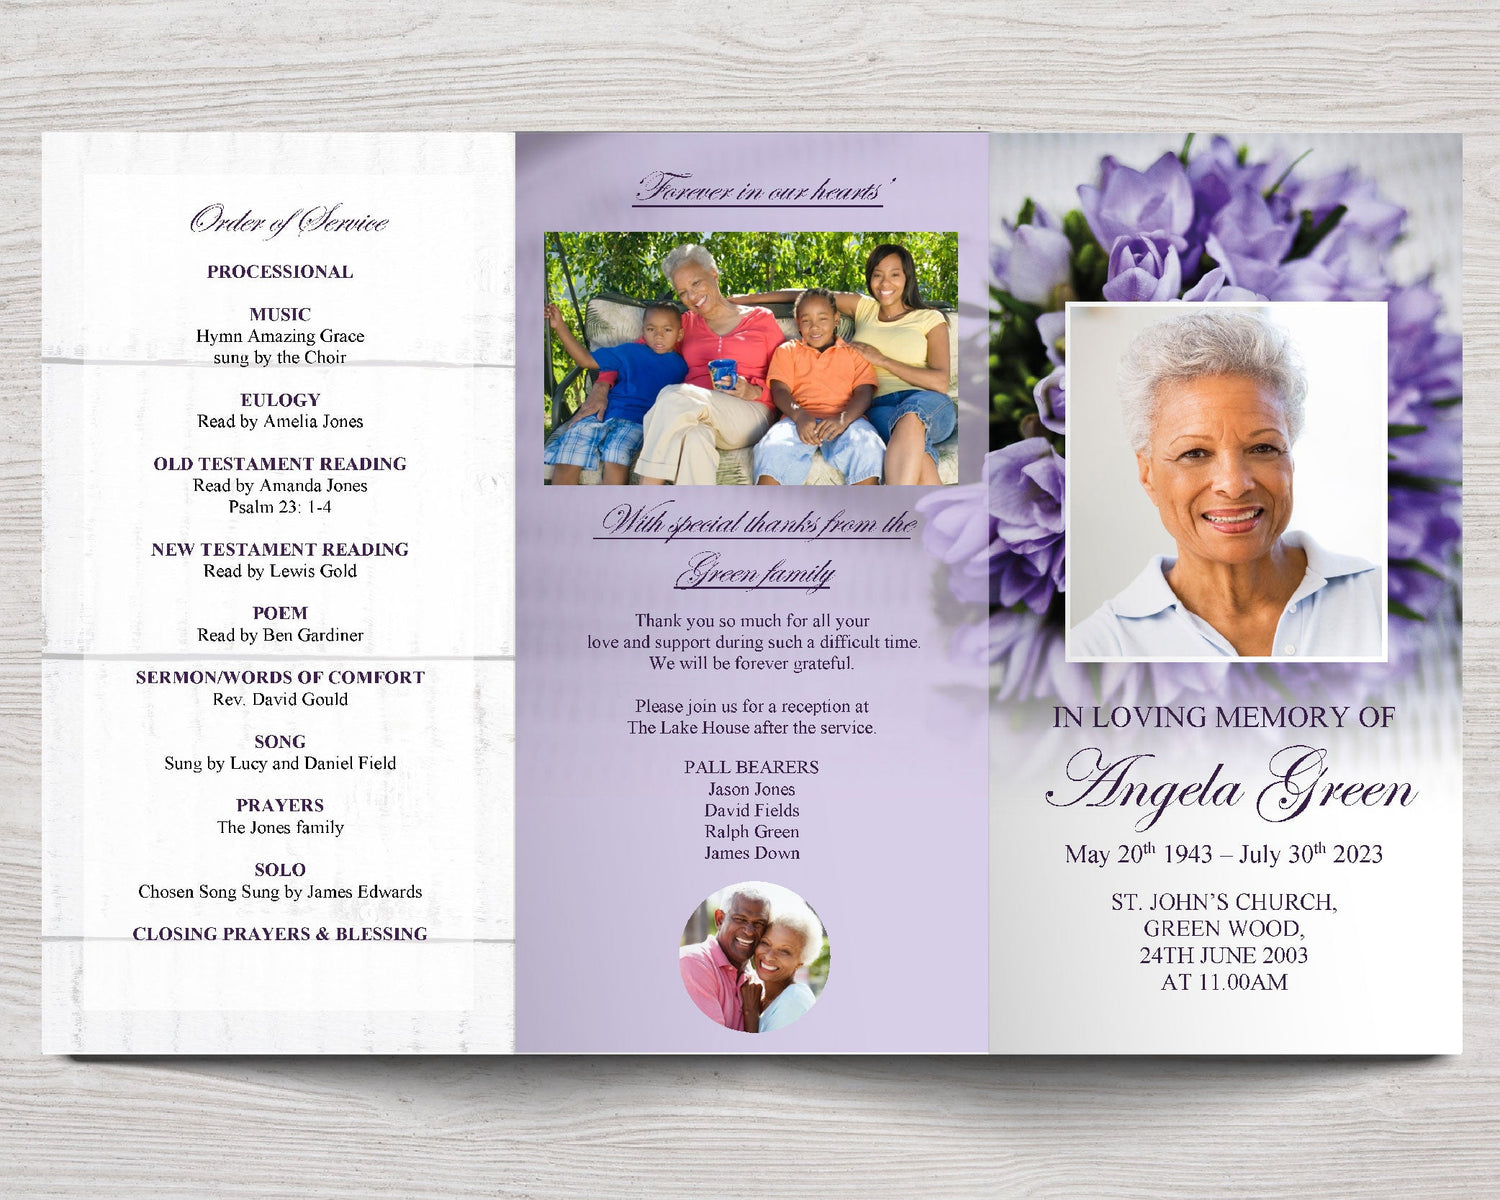 11x17 Trifold Purple Flowers Funeral Program Template